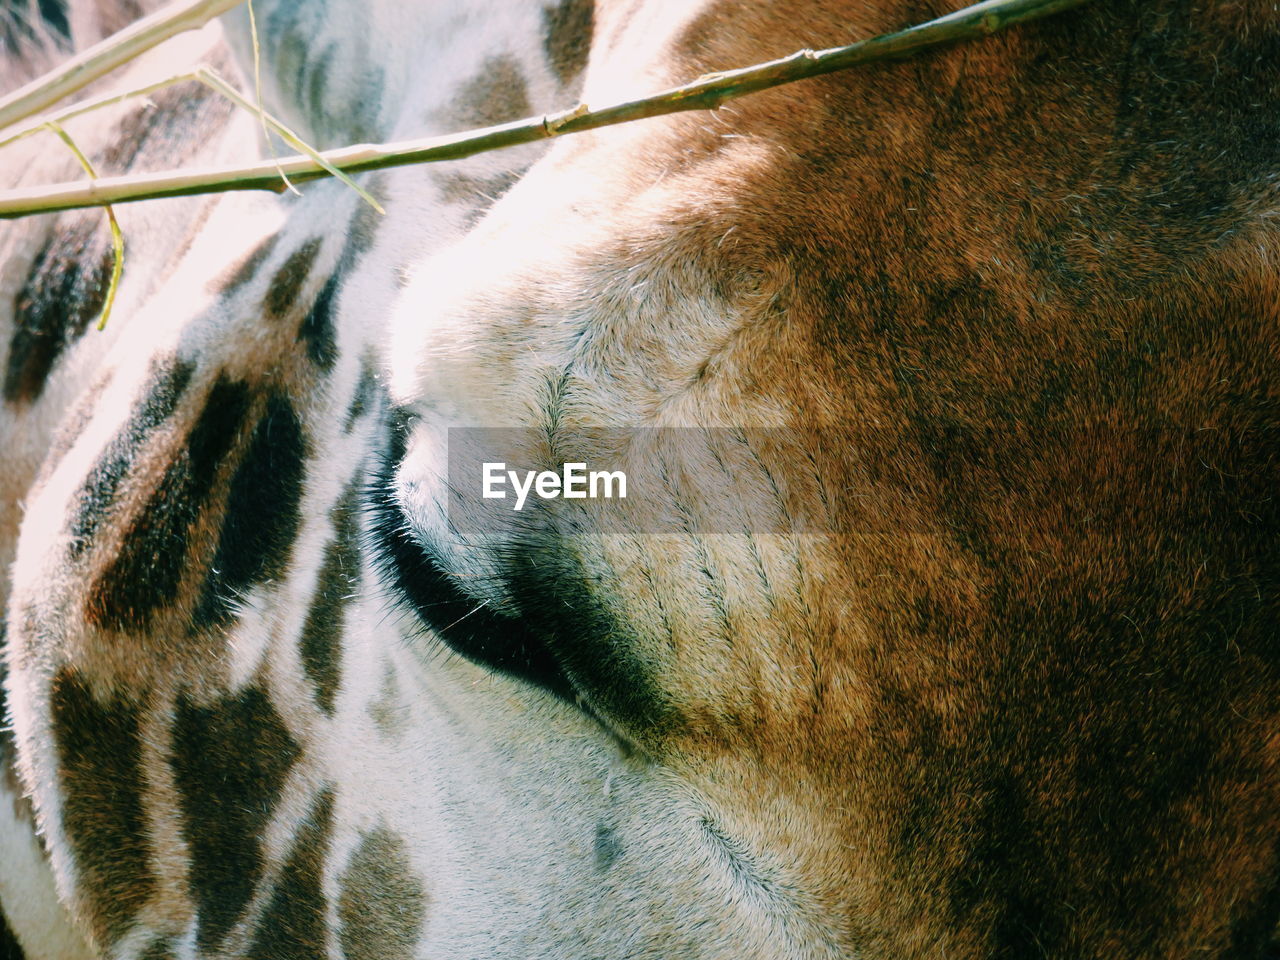 Close-up of giraffe eye